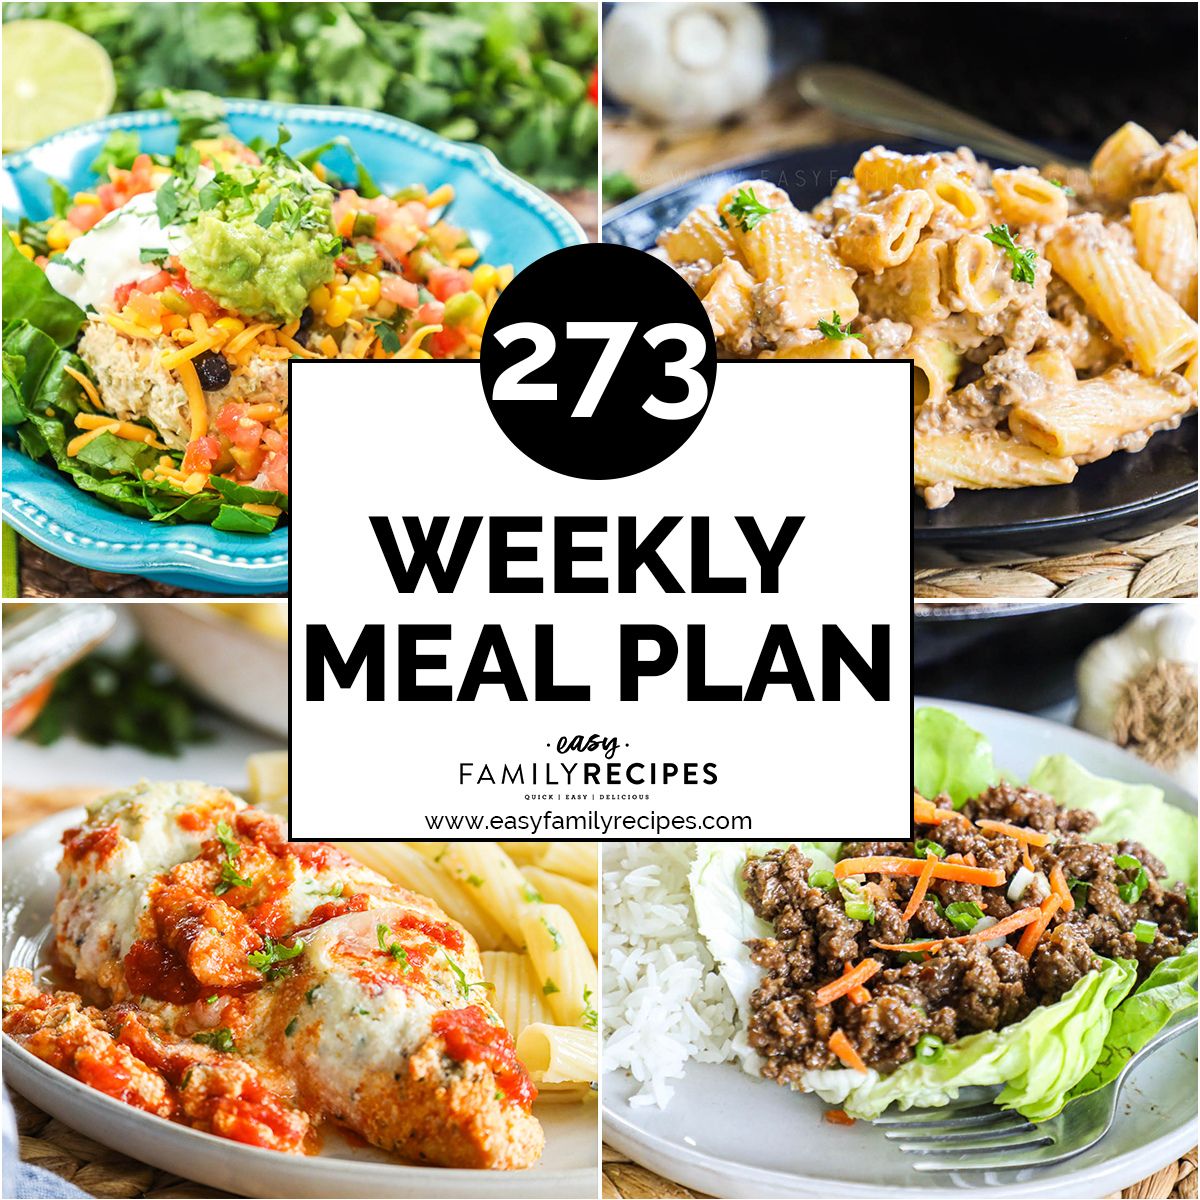 Weekly Meal Plan 273